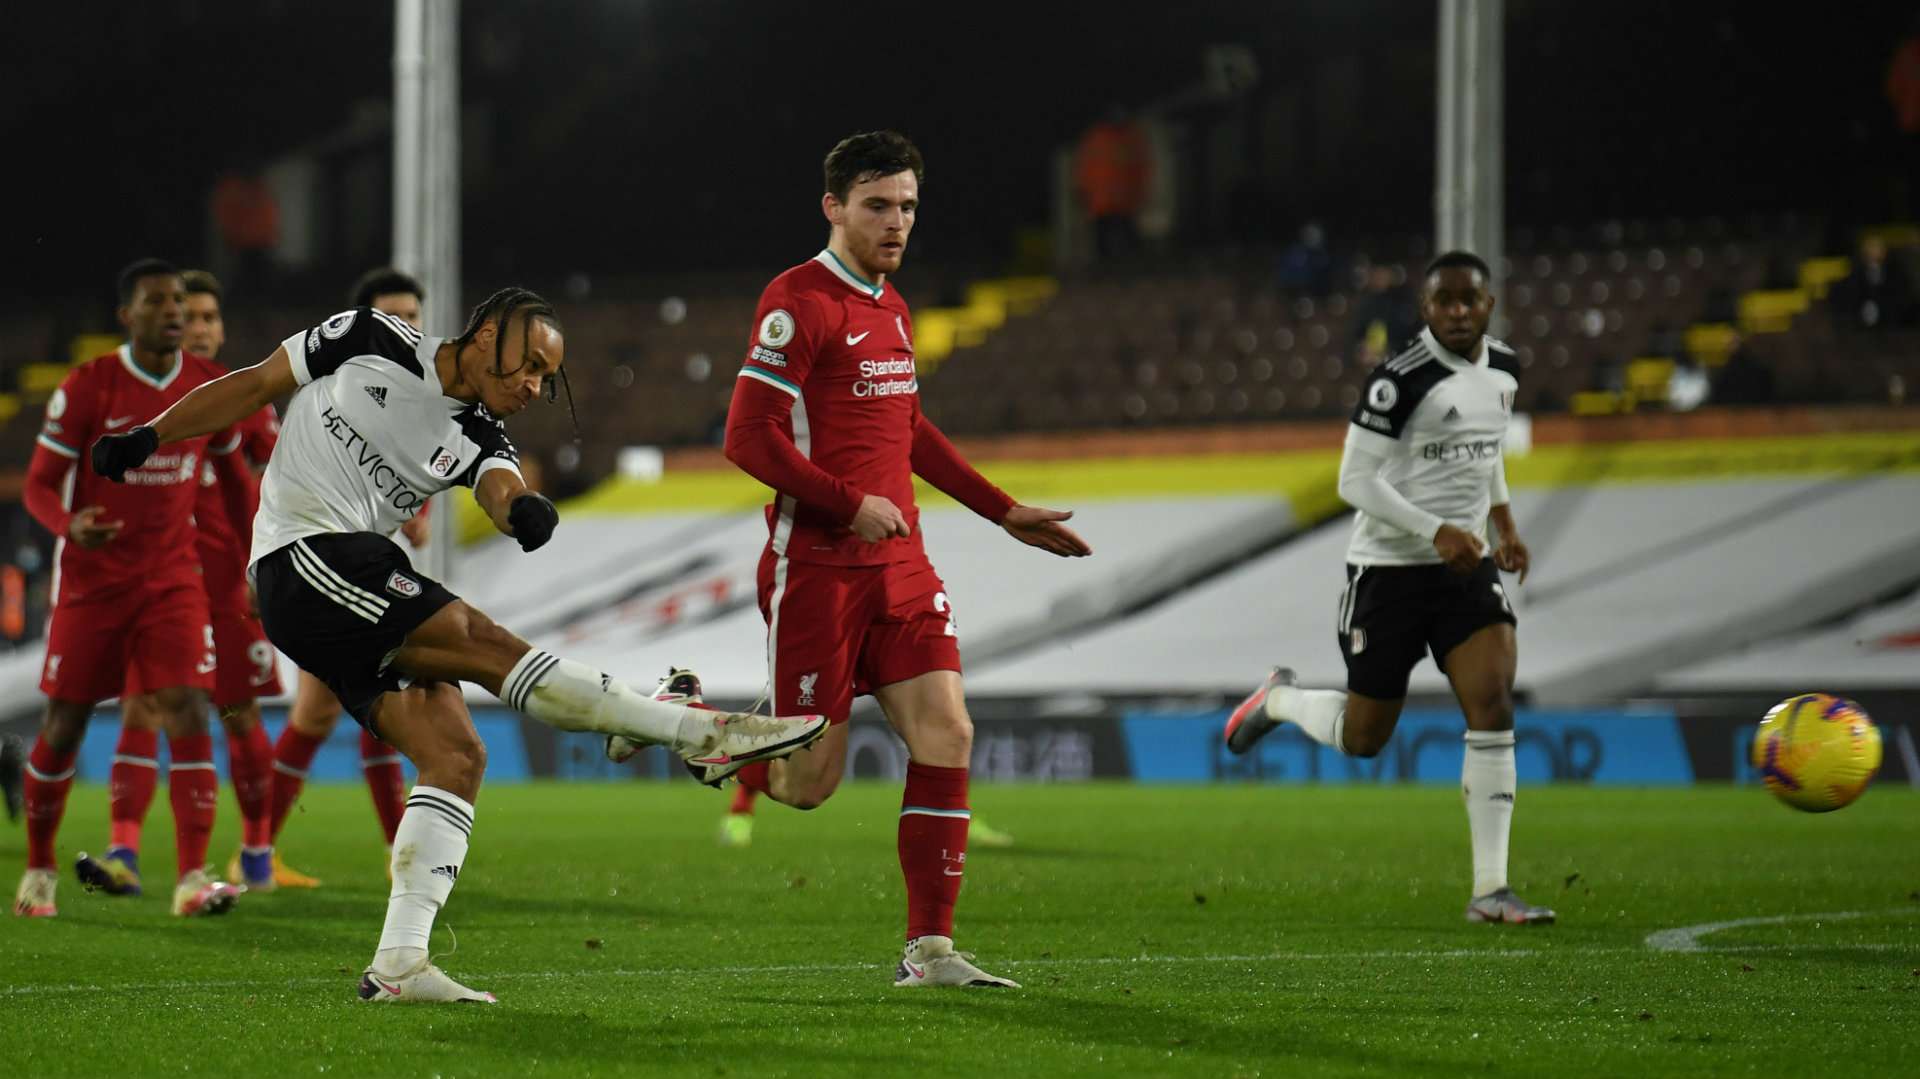 Bobby De Cordova-Reid Fulham vs Liverpool Premier League 2020-21